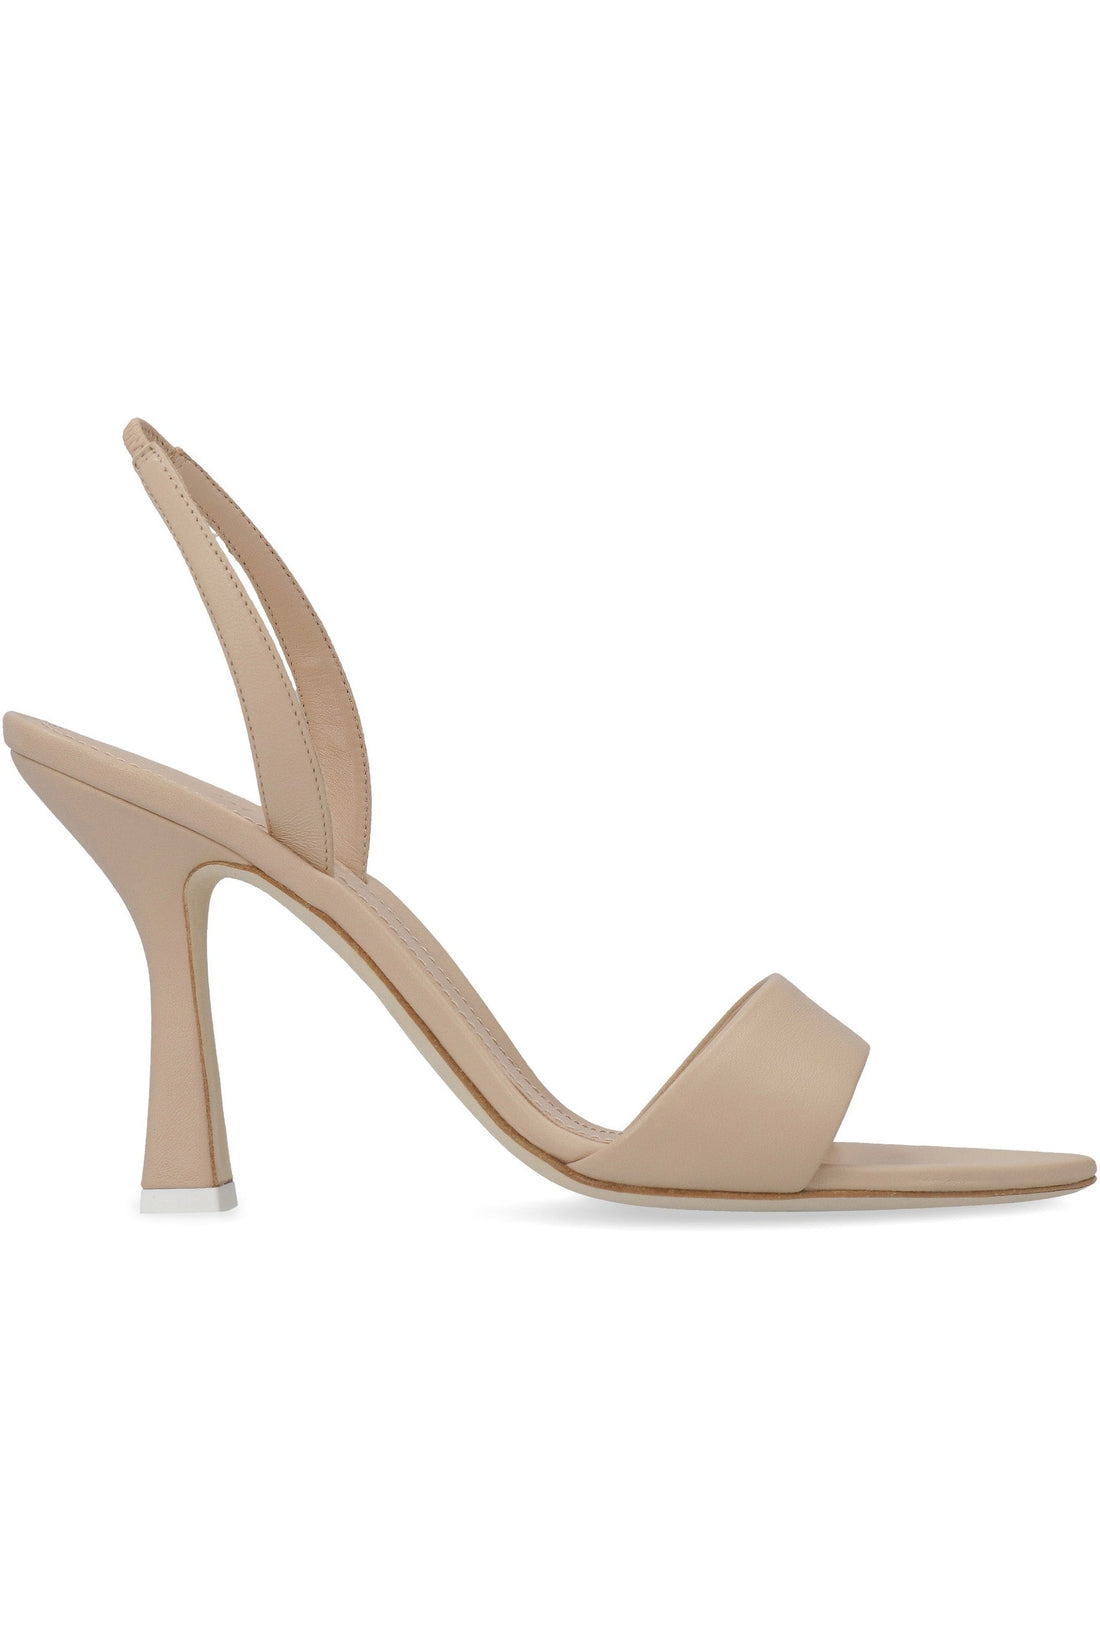 Piralo-OUTLET-SALE-Lily heeled sandals-ARCHIVIST